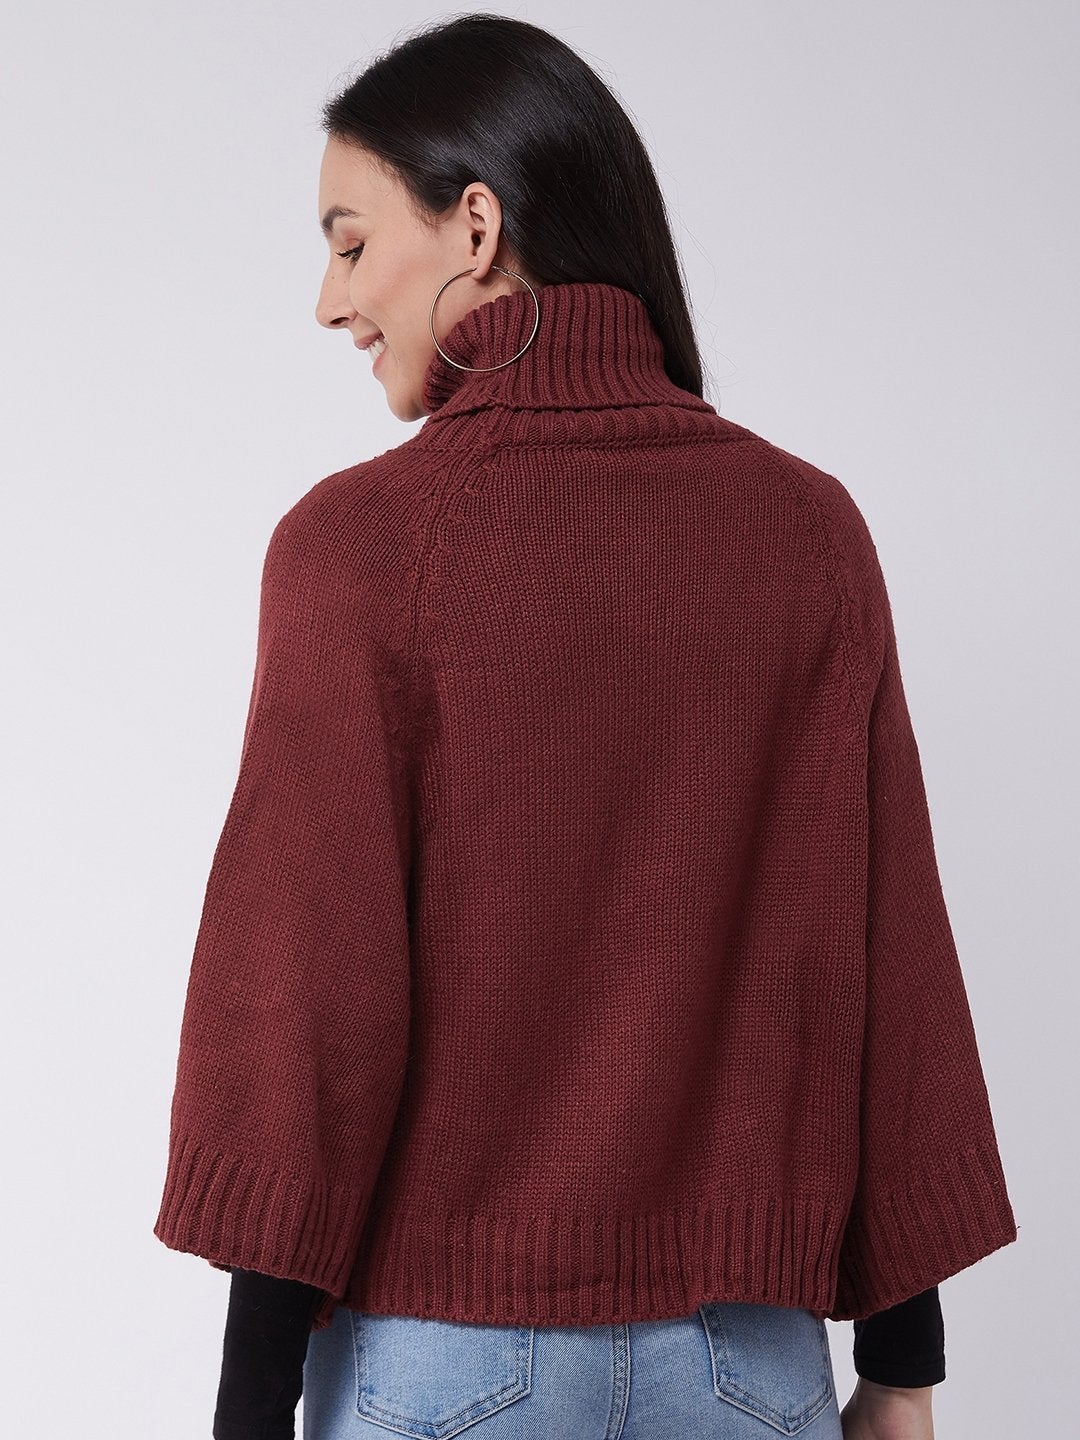 Women's Maroon Sweater Poncho - InWeave